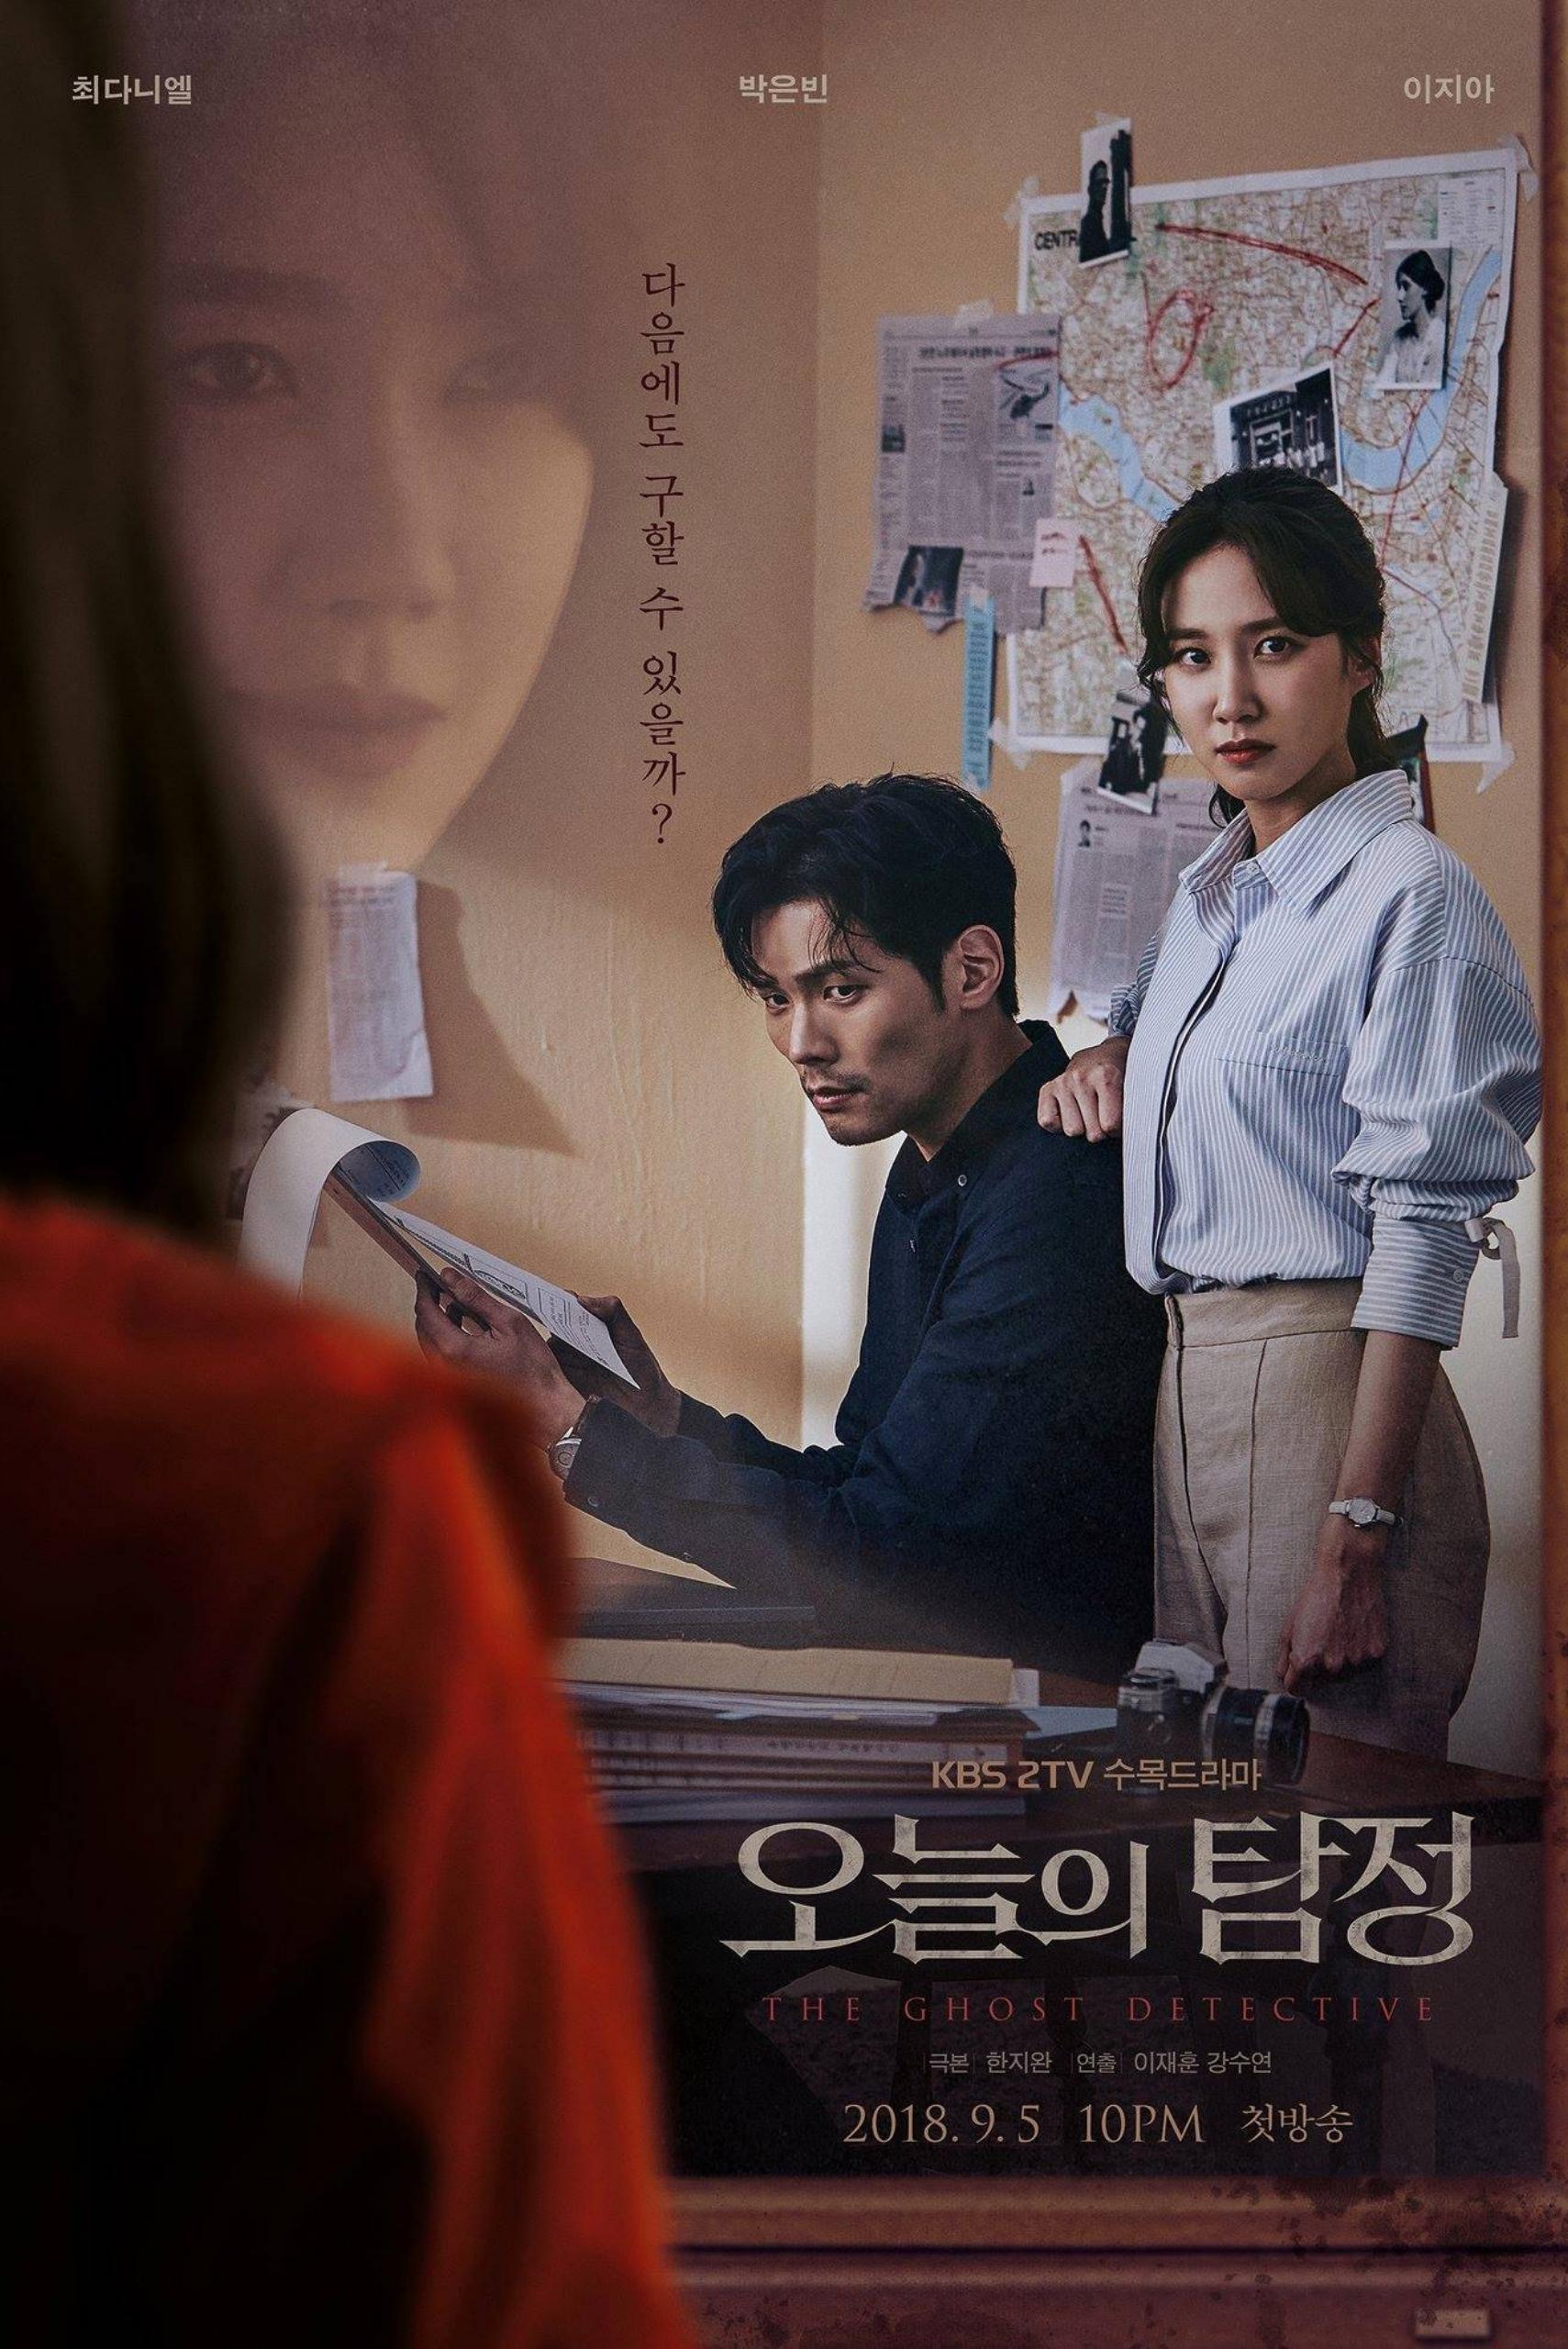 phim The Ghost Detective do Park Eun Bin đóng vai chính